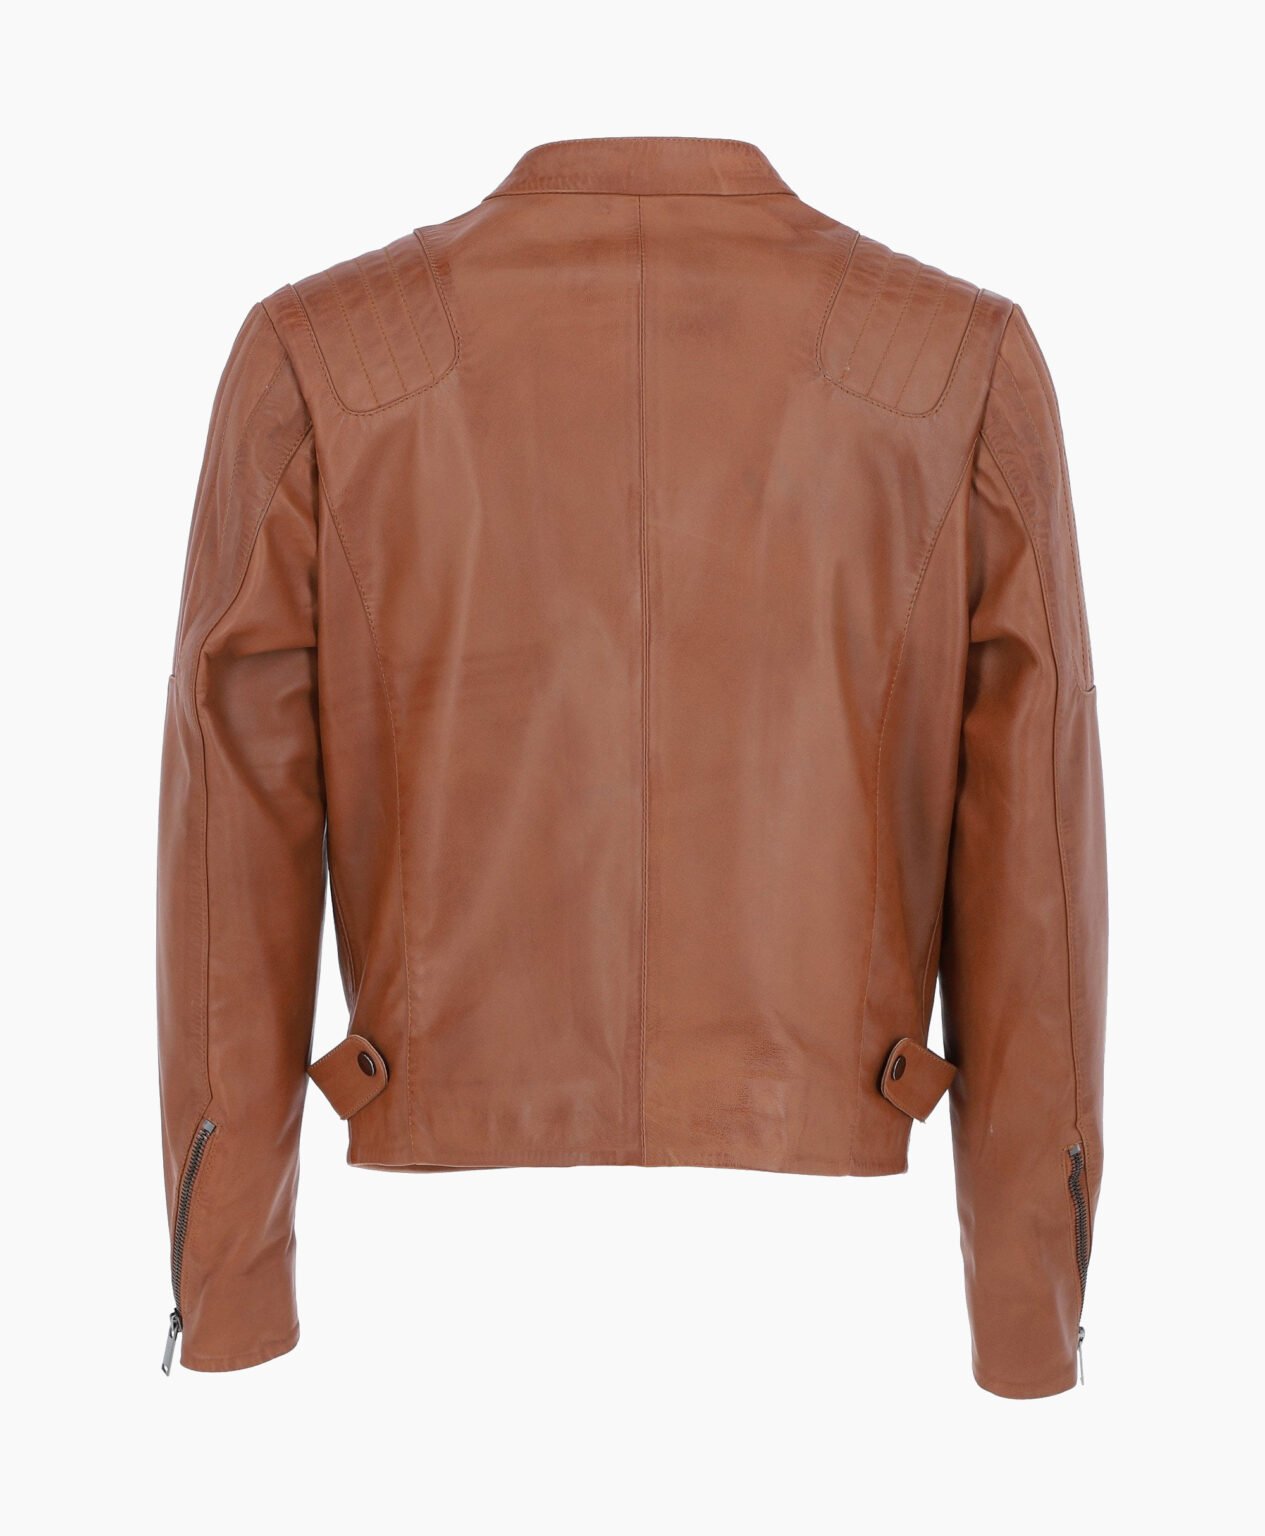 vogue-jacket-leather-biker-jacket-tan-charleston-image202